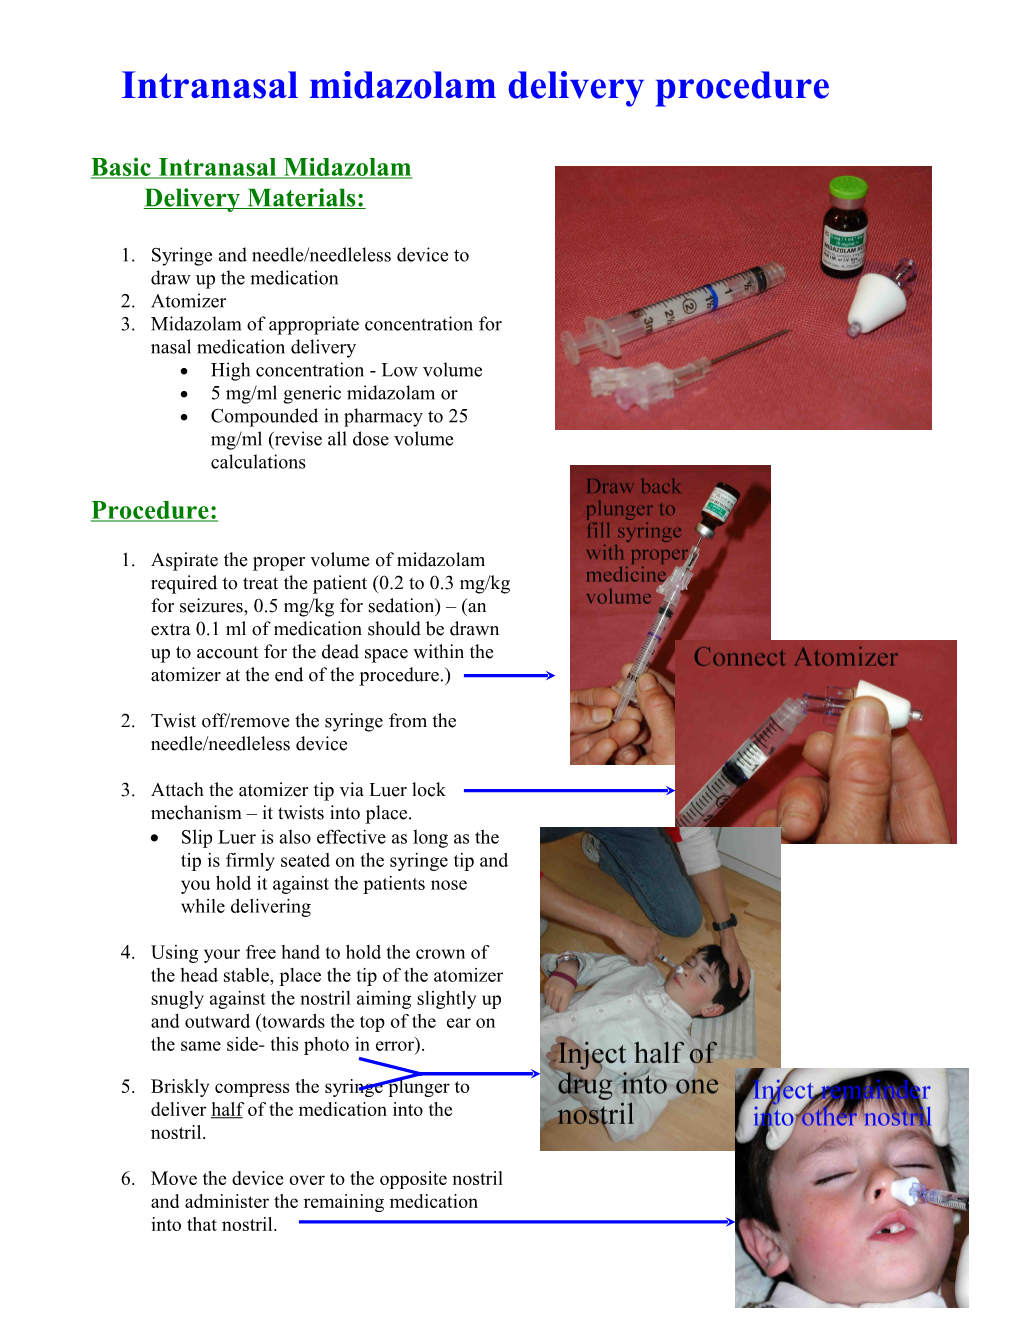 MAD Nasal Medication Delivery Procedure